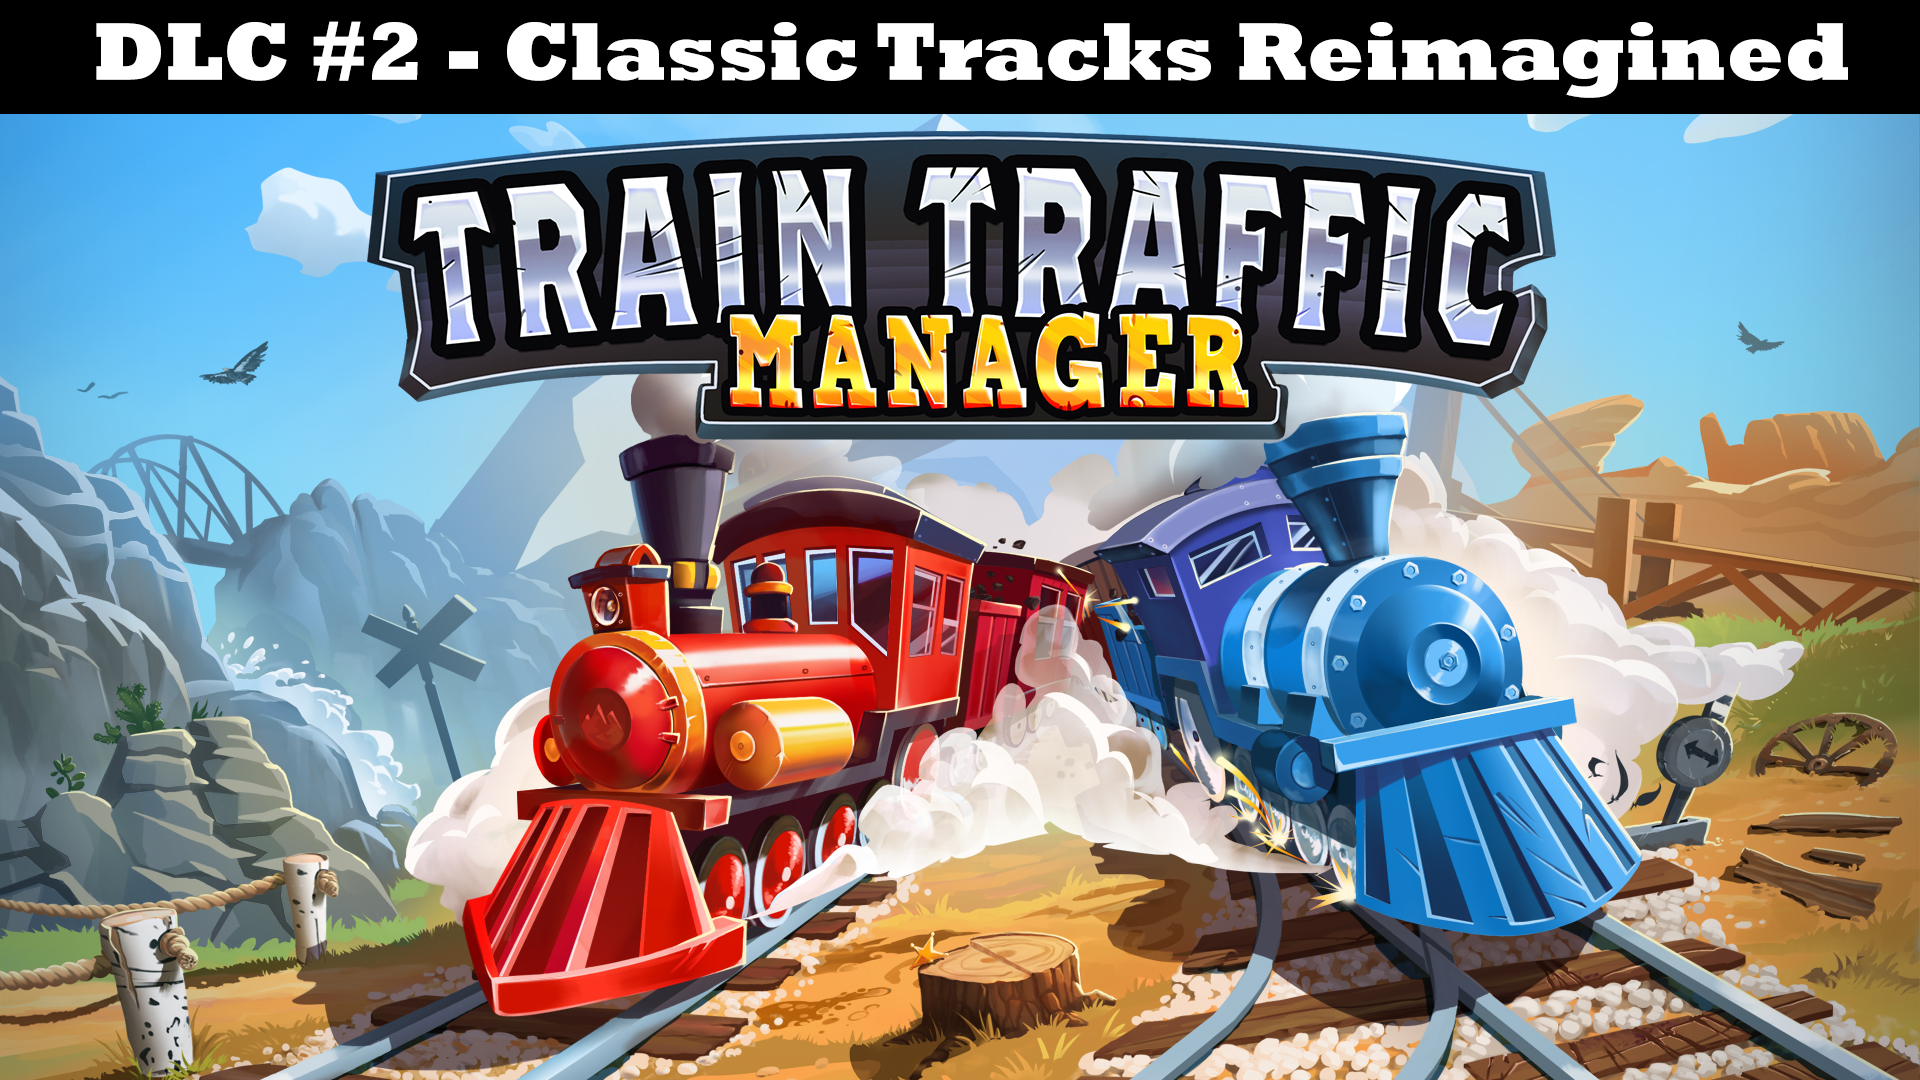 Train Traffic Manager DLC #2 - Classic Tracks Reimagined